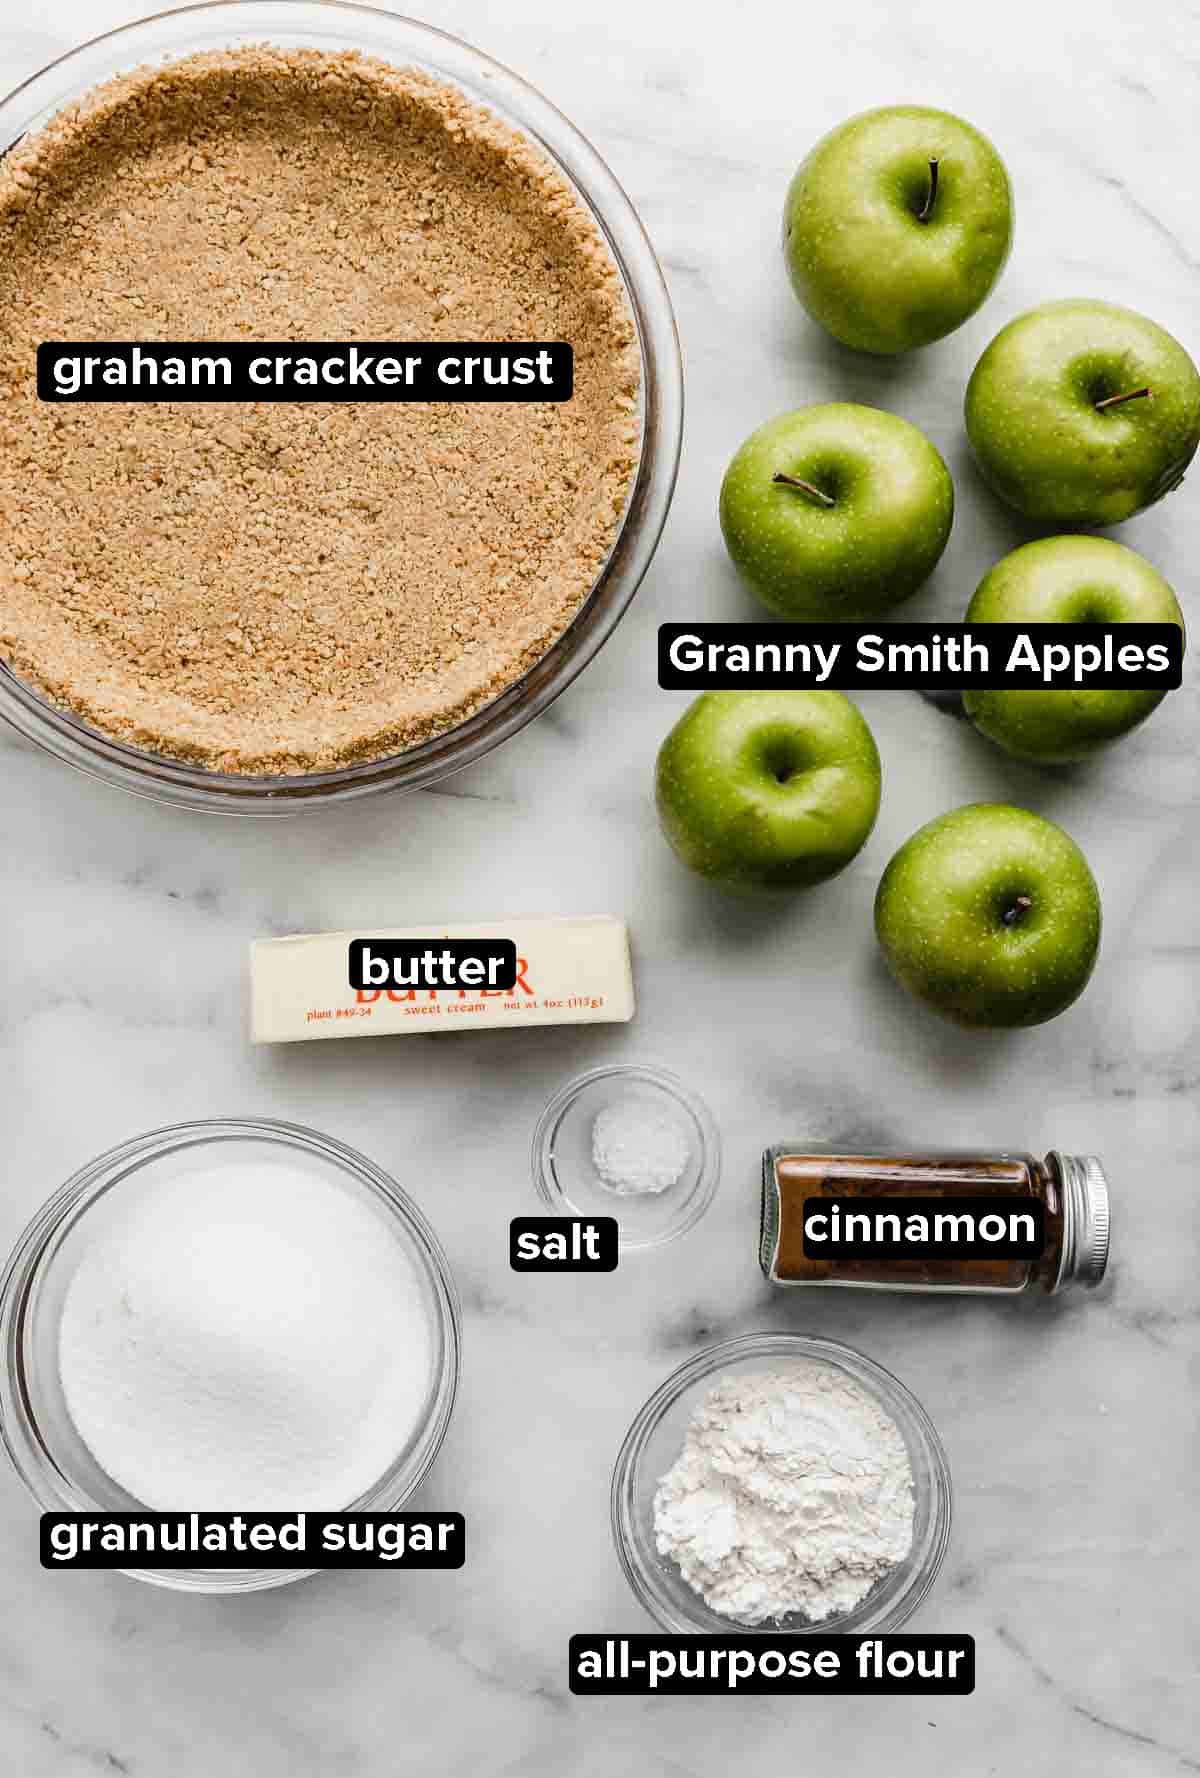 Apple Pie with Graham Cracker Crust ingredients including a graham cracker crust, Granny Smith apples, butter, sugar, flour, cinnamon, salt.